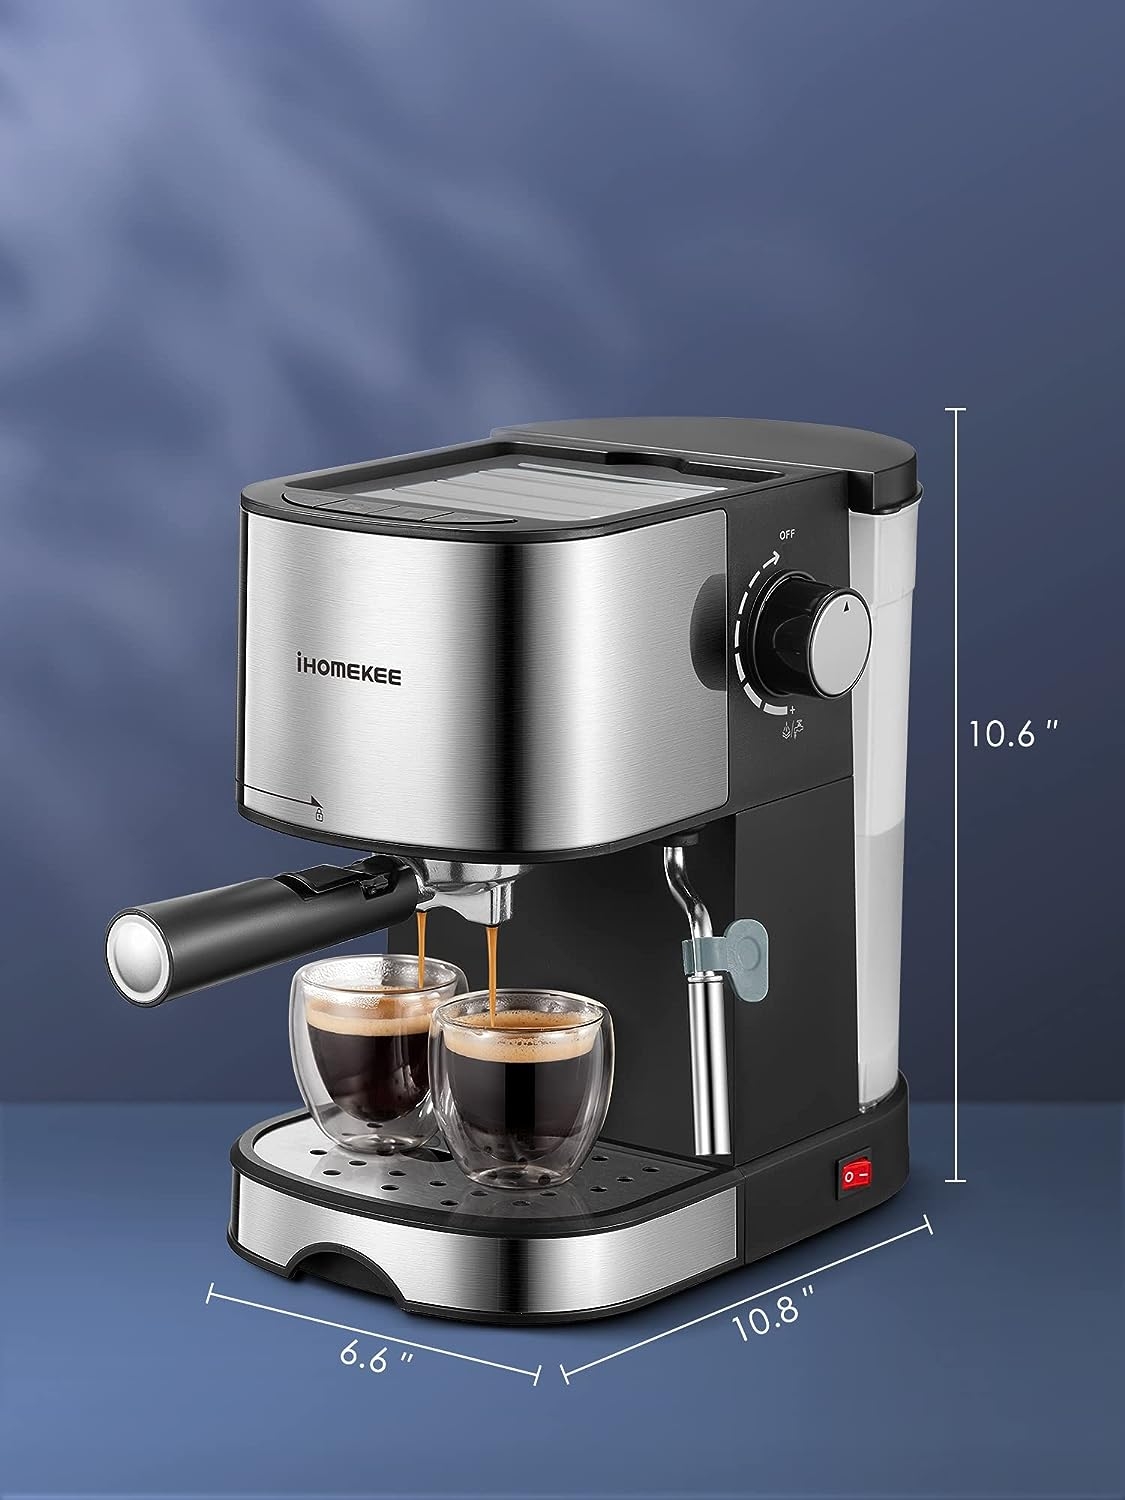 Ihomekee Espresso Machine 15 Bar Pump Pressure, Espresso and